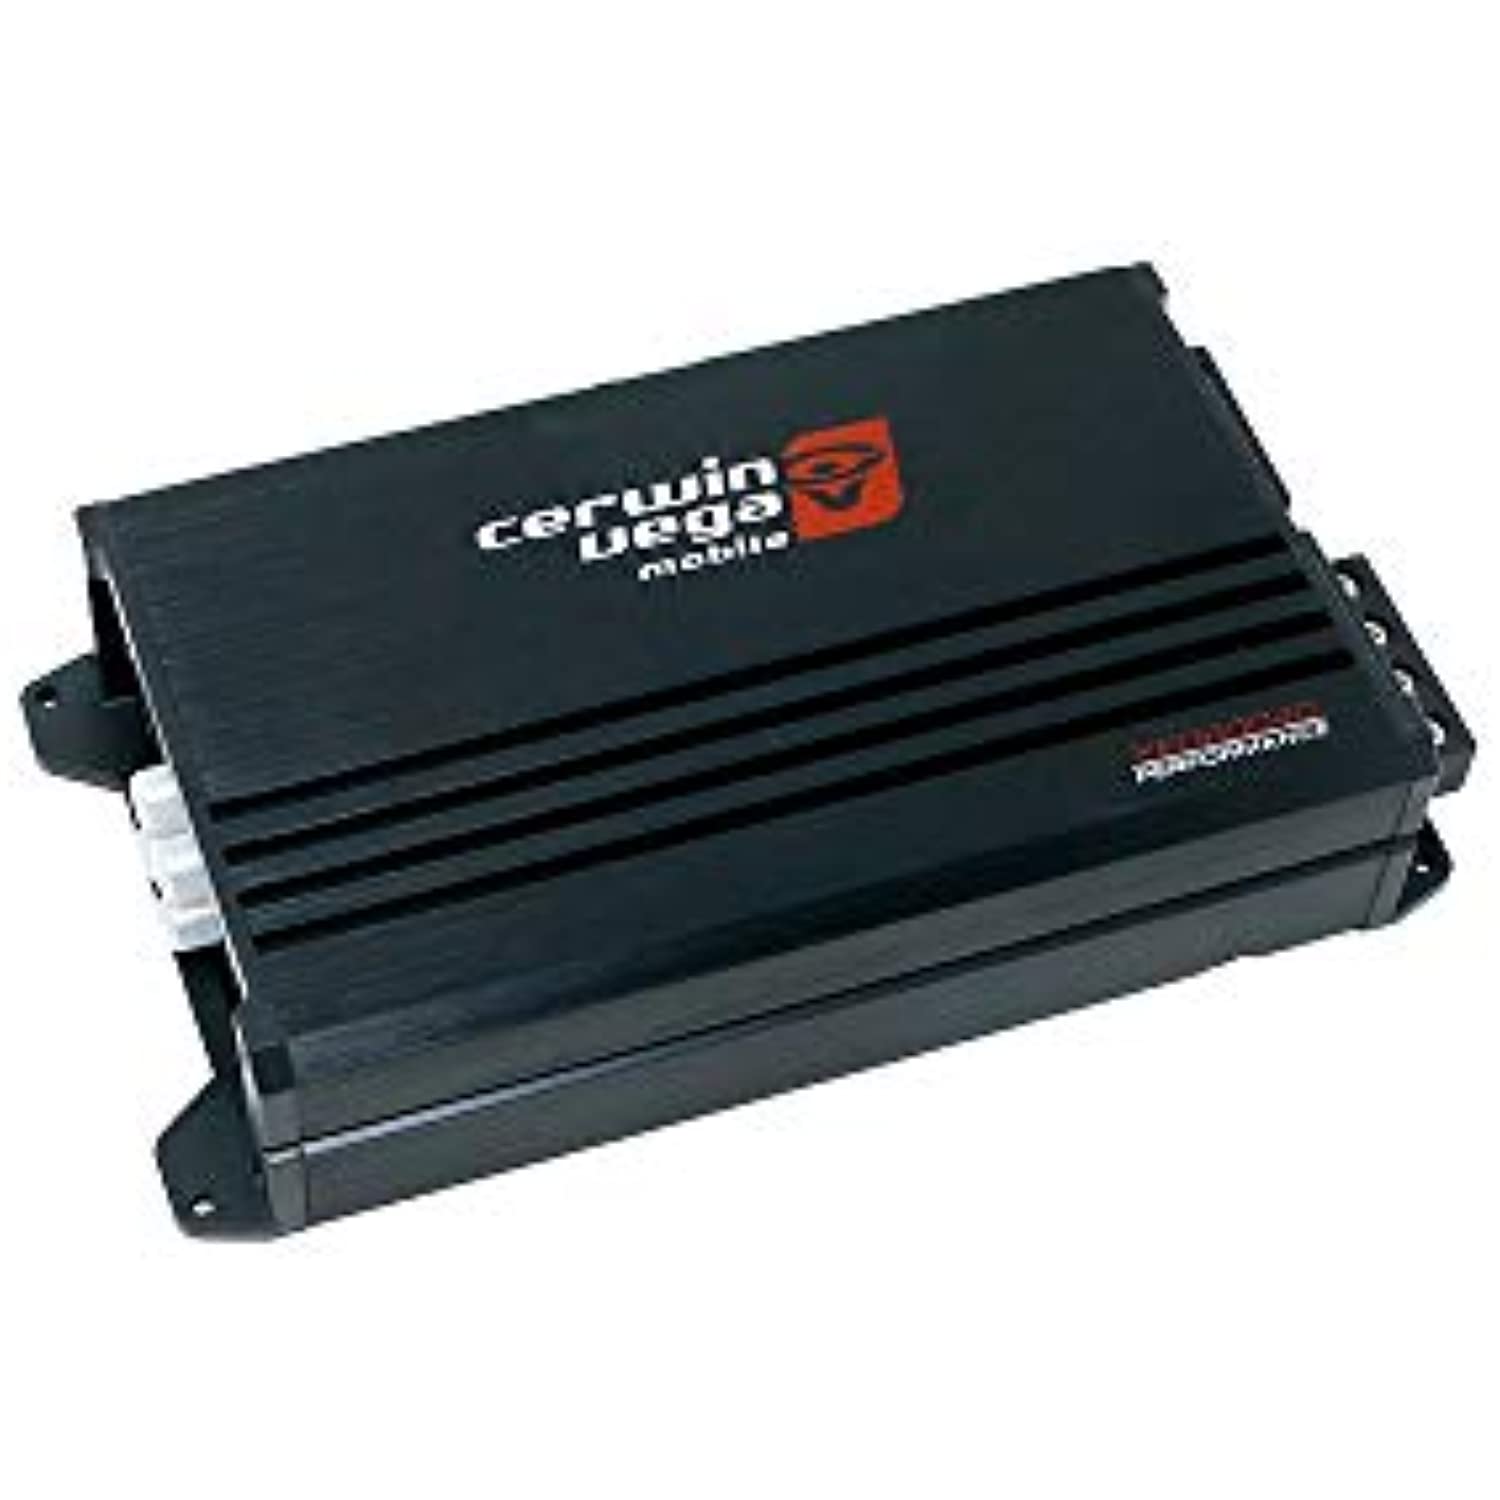 CERWIN Vega XED6004 600W Max 4-Channel Class D Amplifier